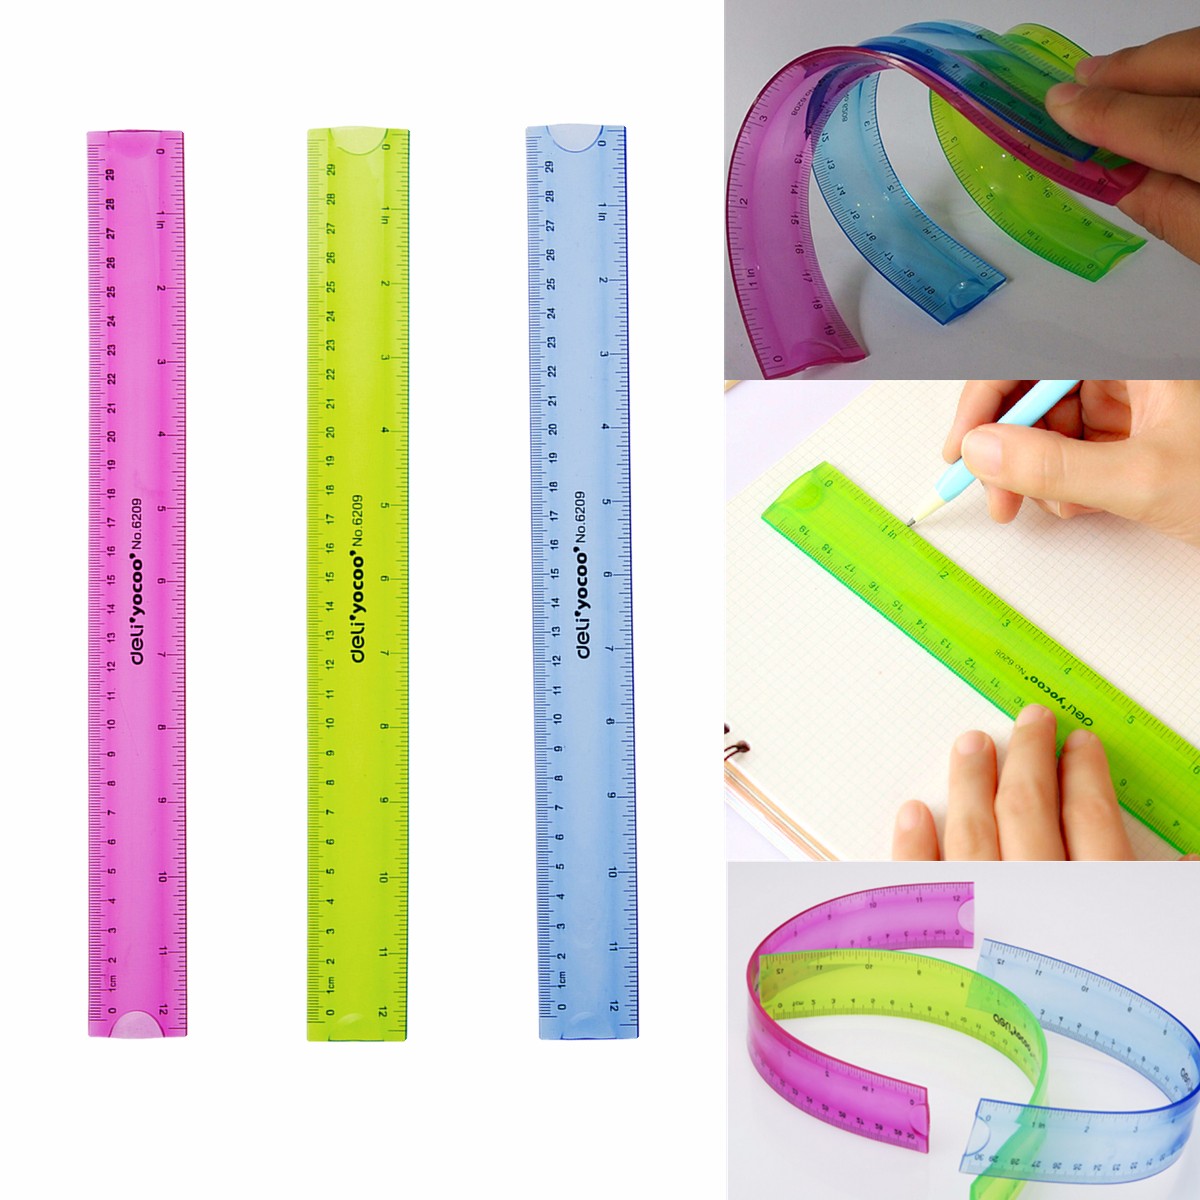 20cm Super Flexible Ruler Stationery Office School Measuring Drawing Tool Random 